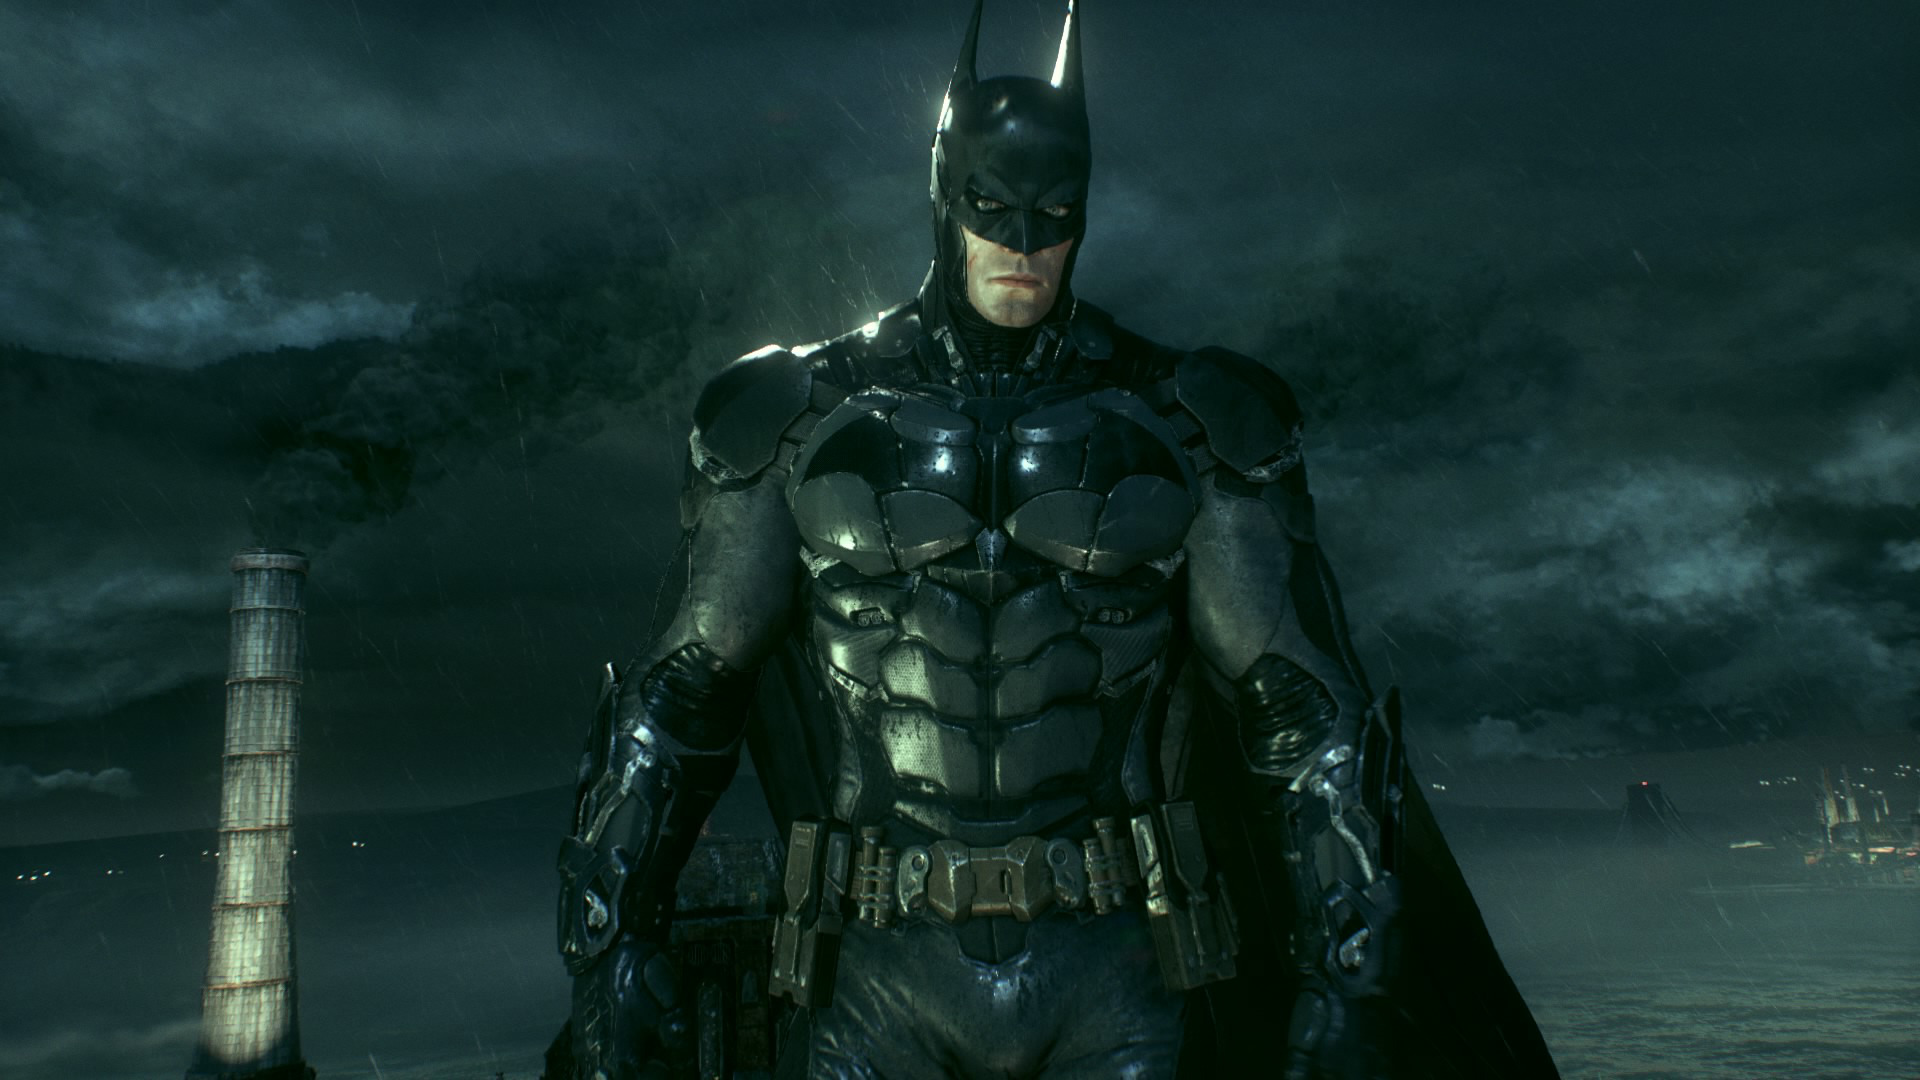 Batman: Arkham Knight Backgrounds on Wallpapers Vista